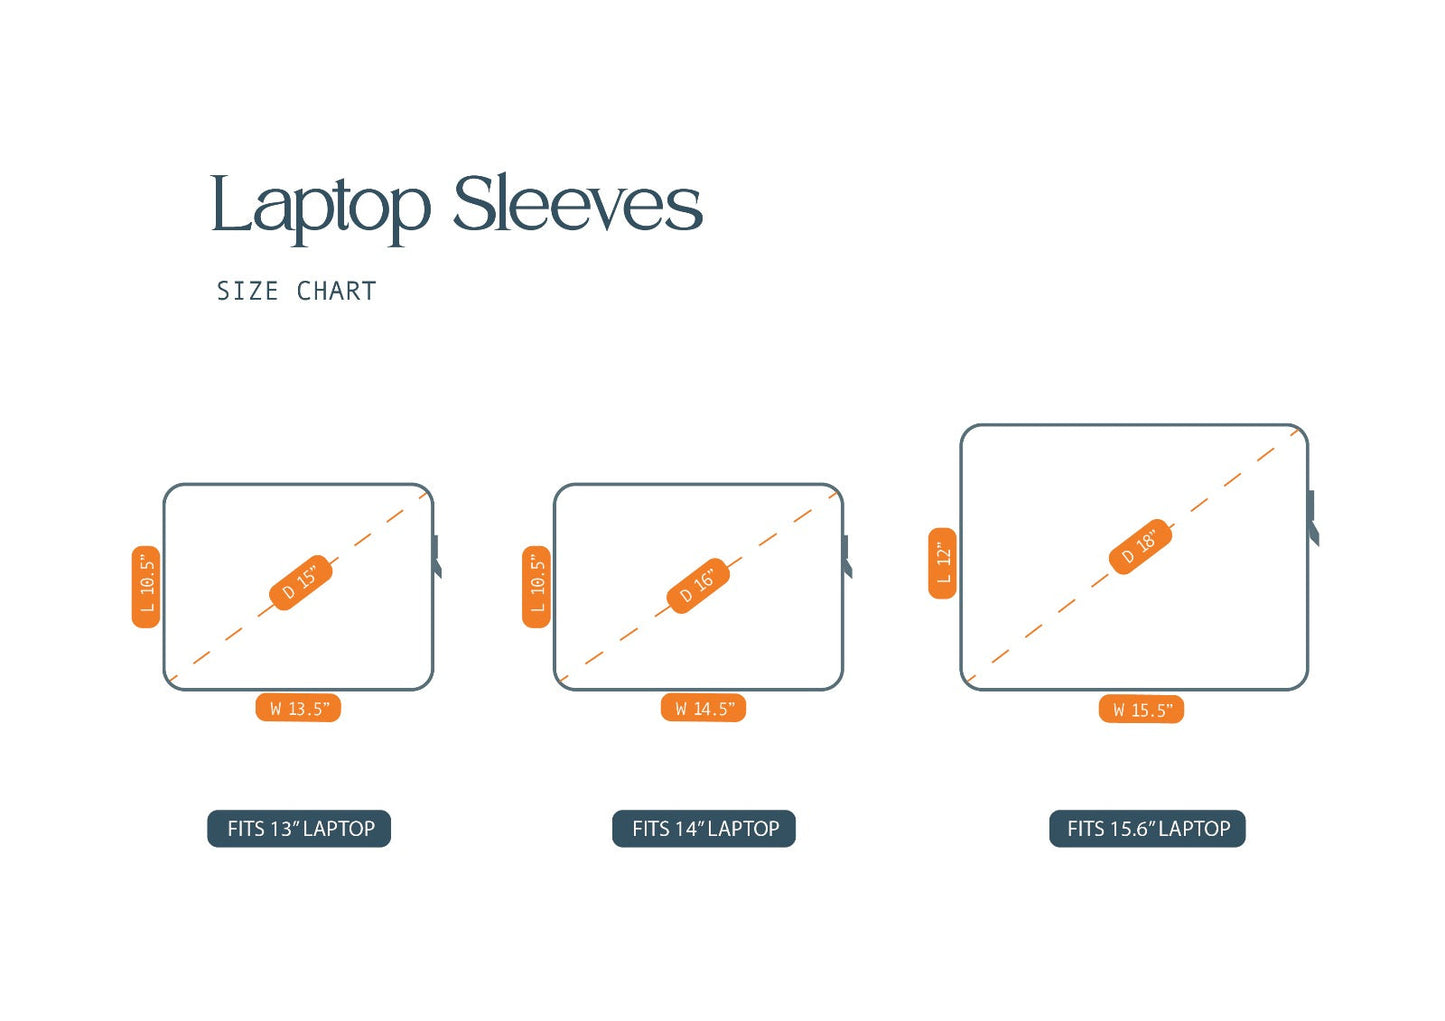 Sustainable Handmade Cotton Laptop Sleeve/Laptop Cover by Ekatra - Black stipes